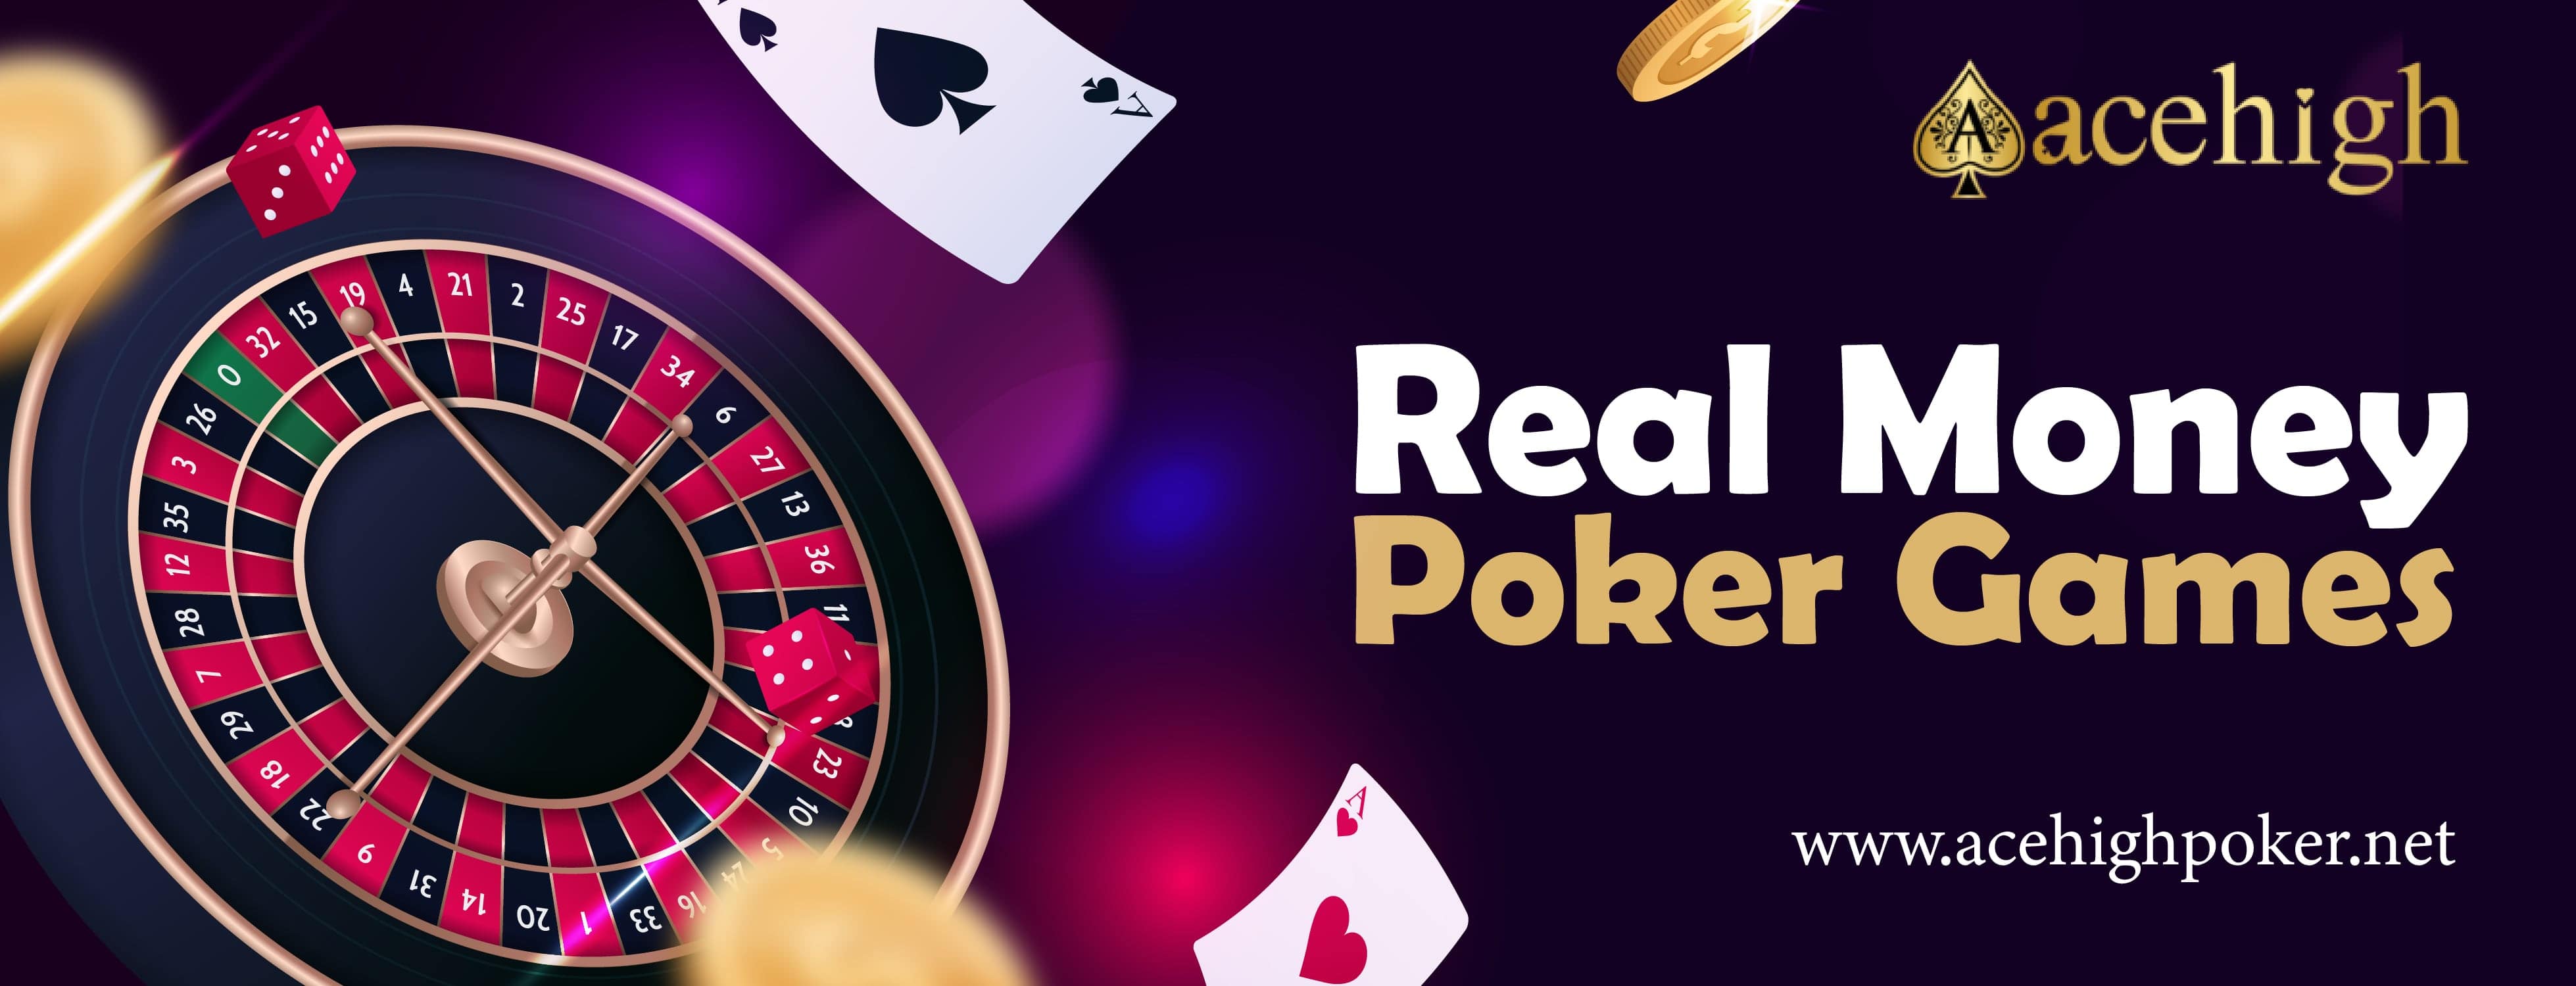 Real Money Poker Games